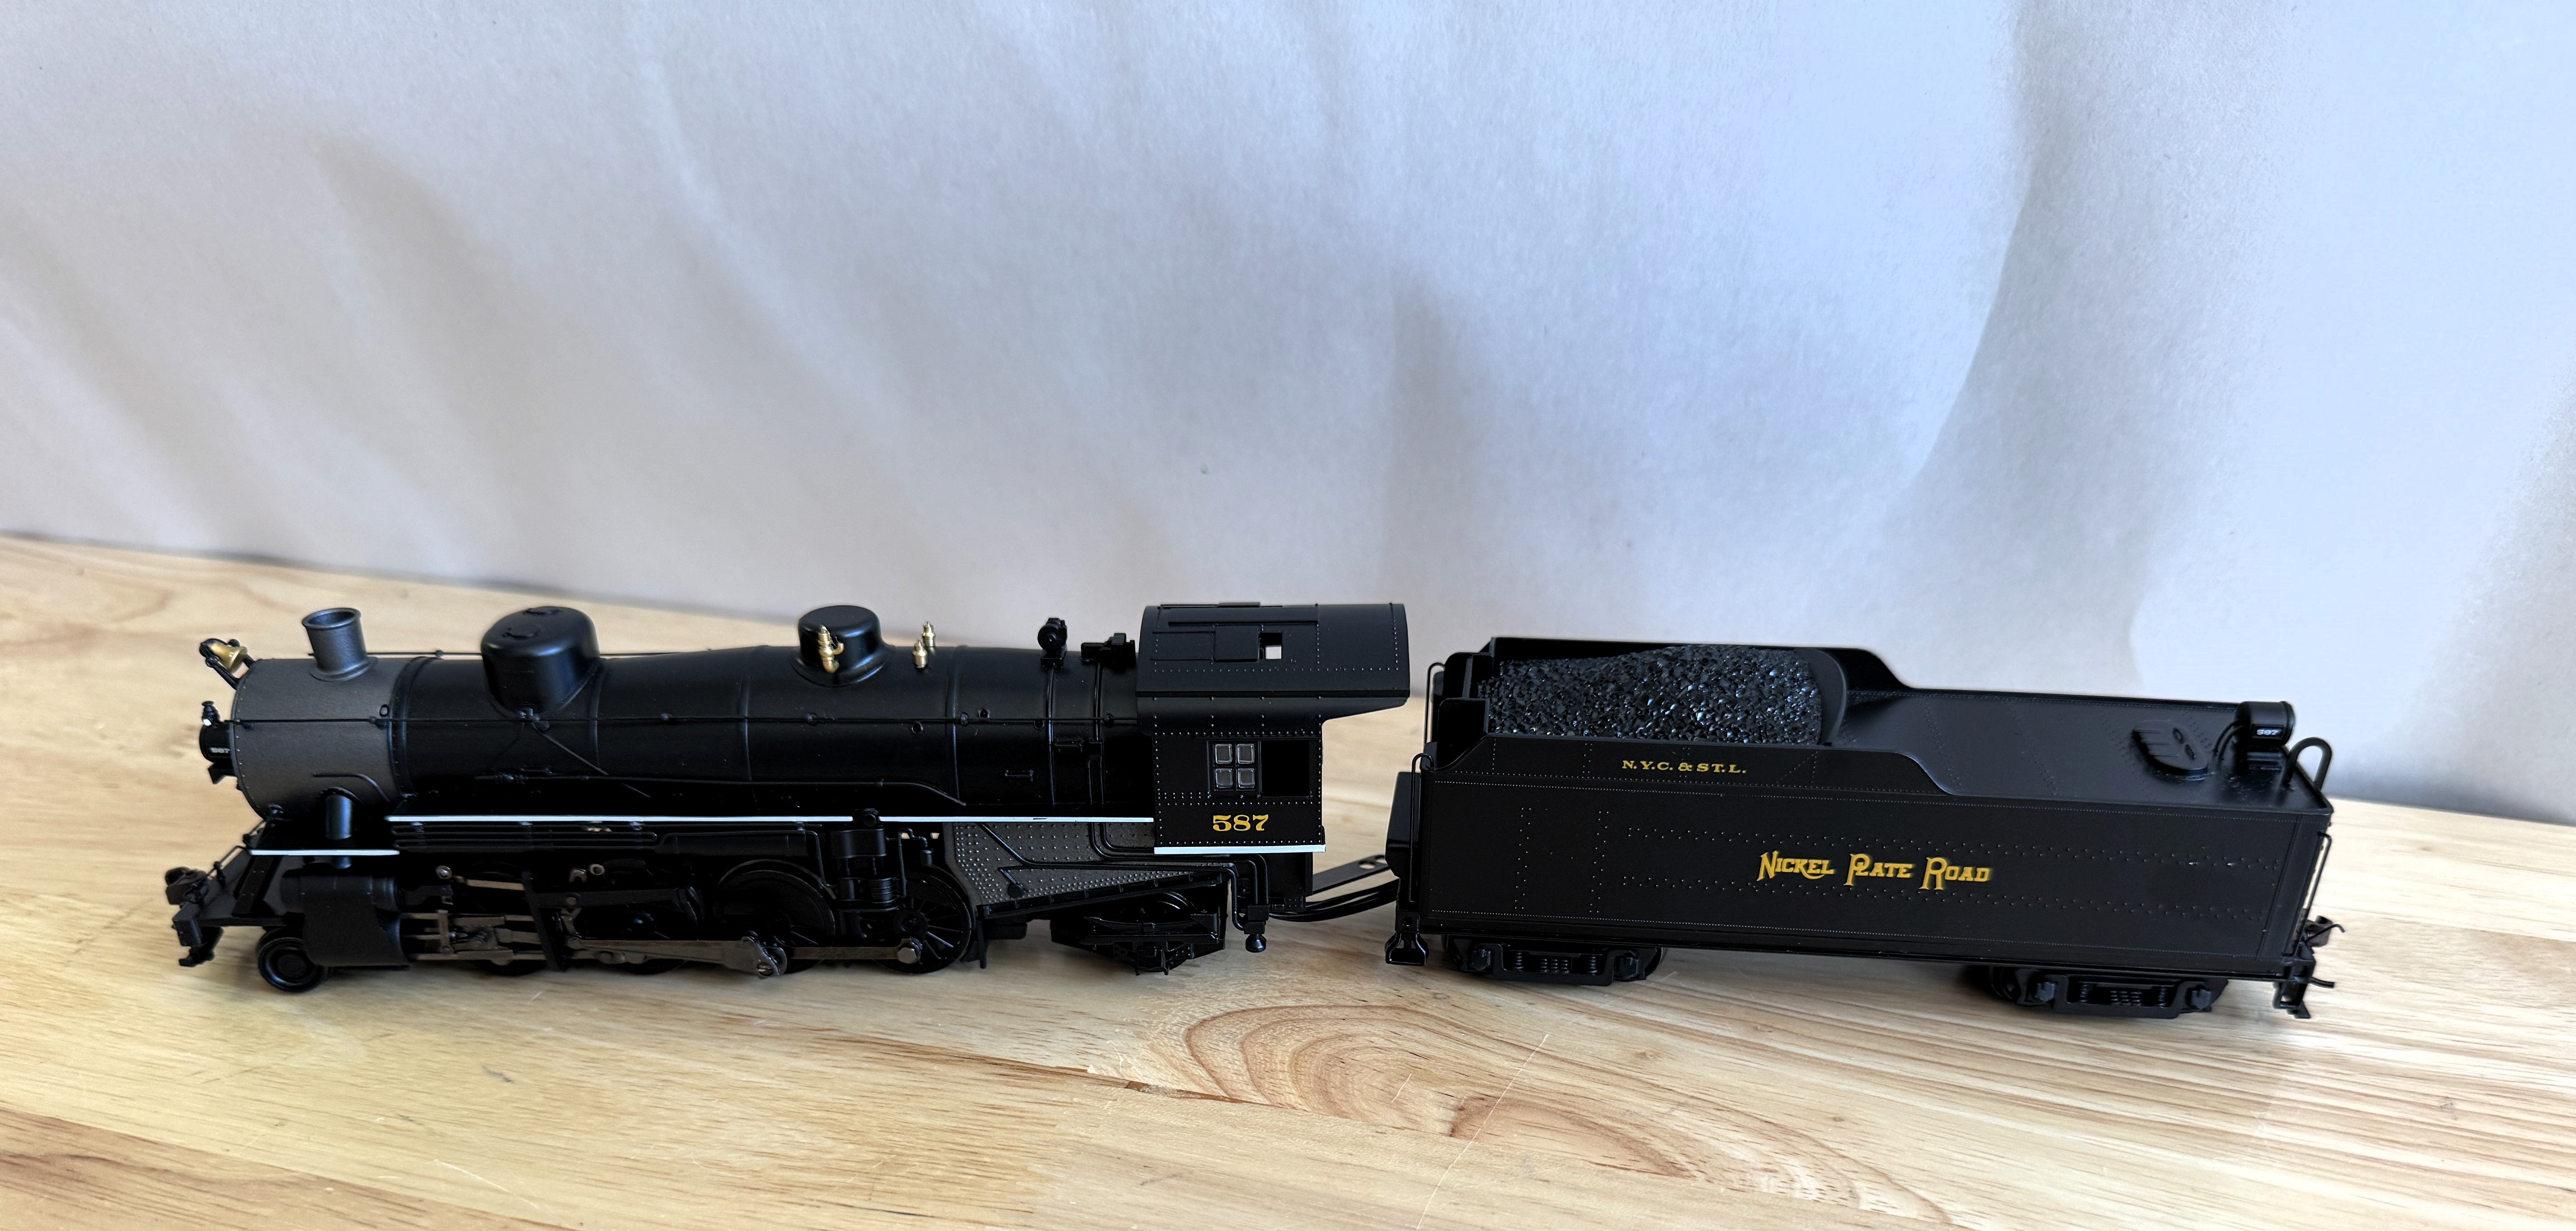 Bachmann 54407 - Light Mikado 2-8-2 Steam Locomotive "Nickel Plate Road" #587 w/ Long Tender